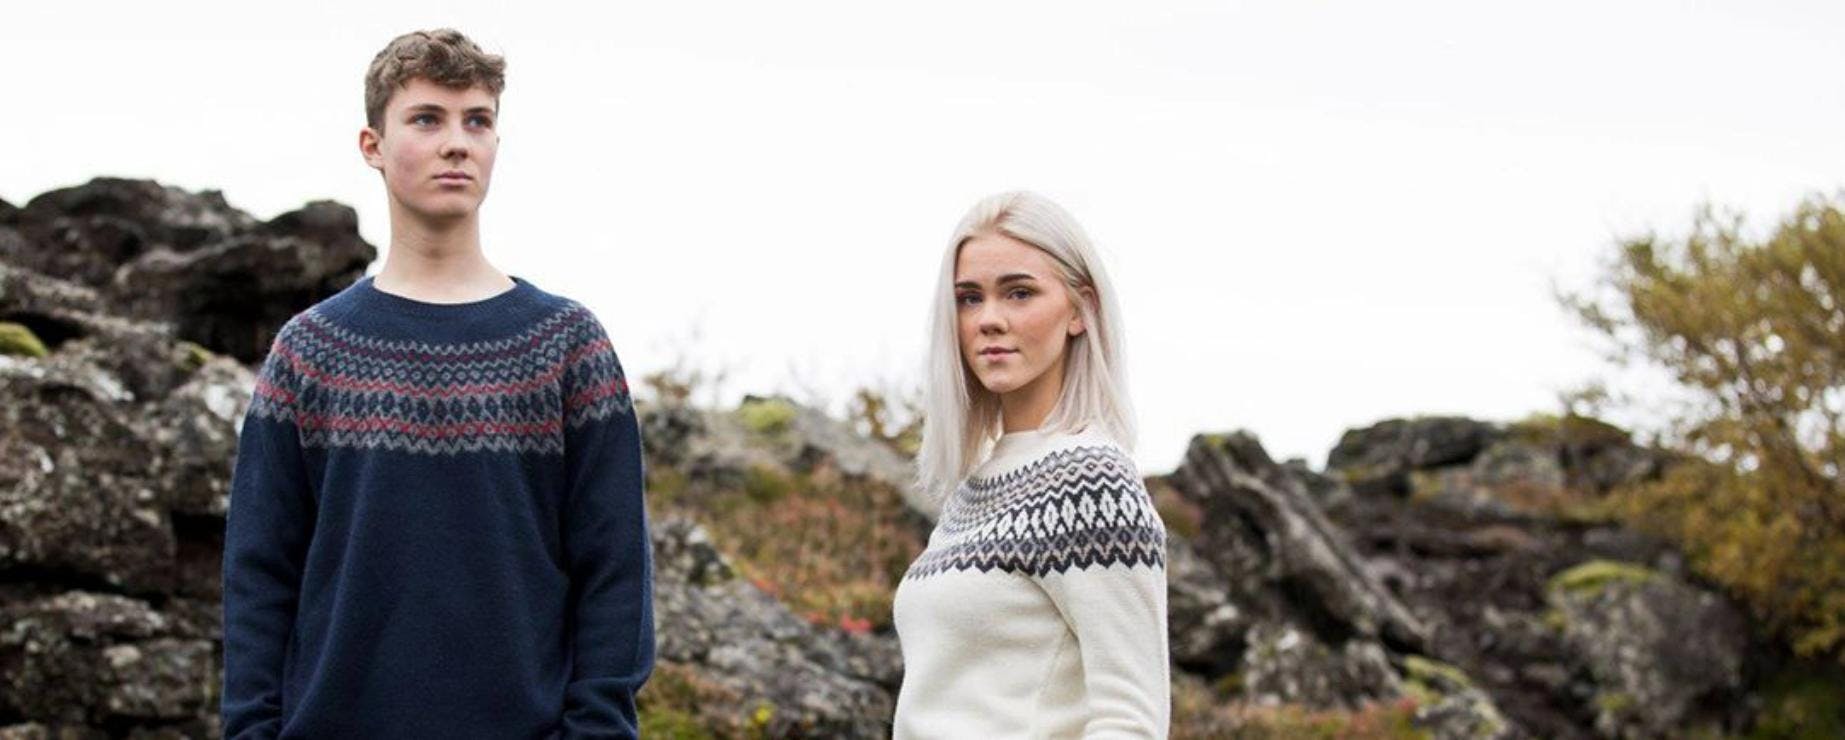 Icewear image: two people wearing Icewear knit sweaters